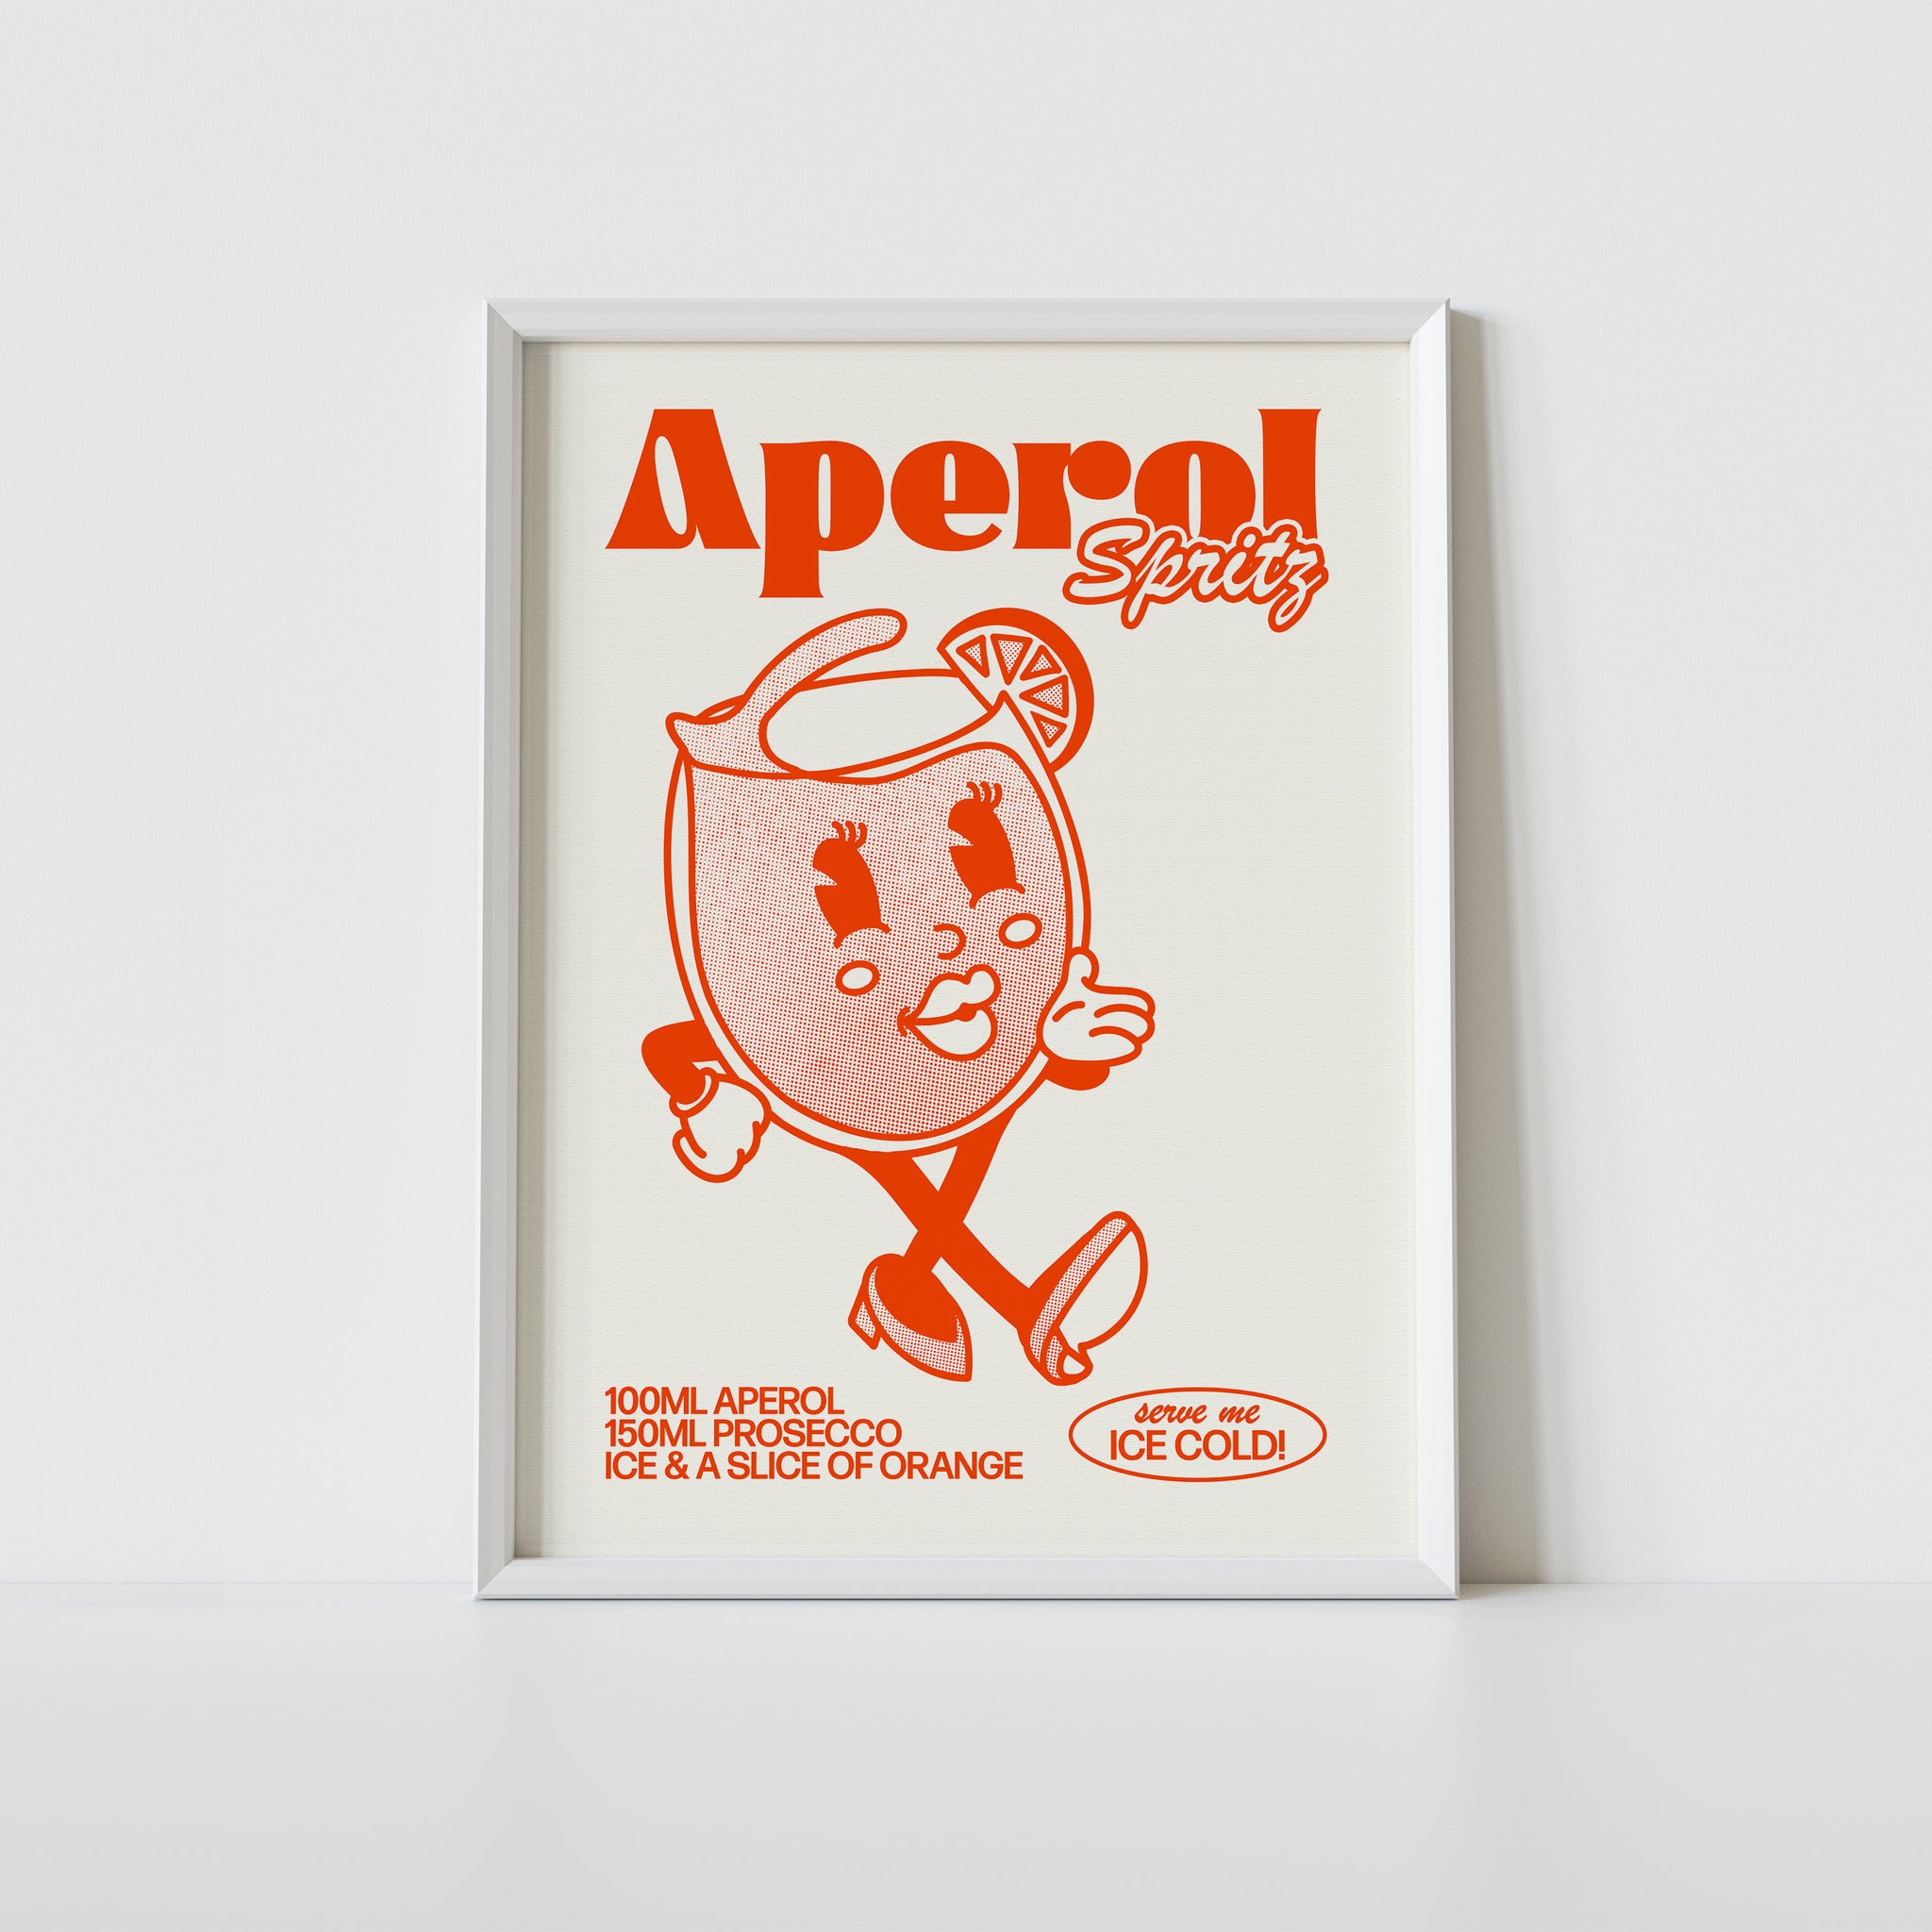 'Aperol Spritz' print